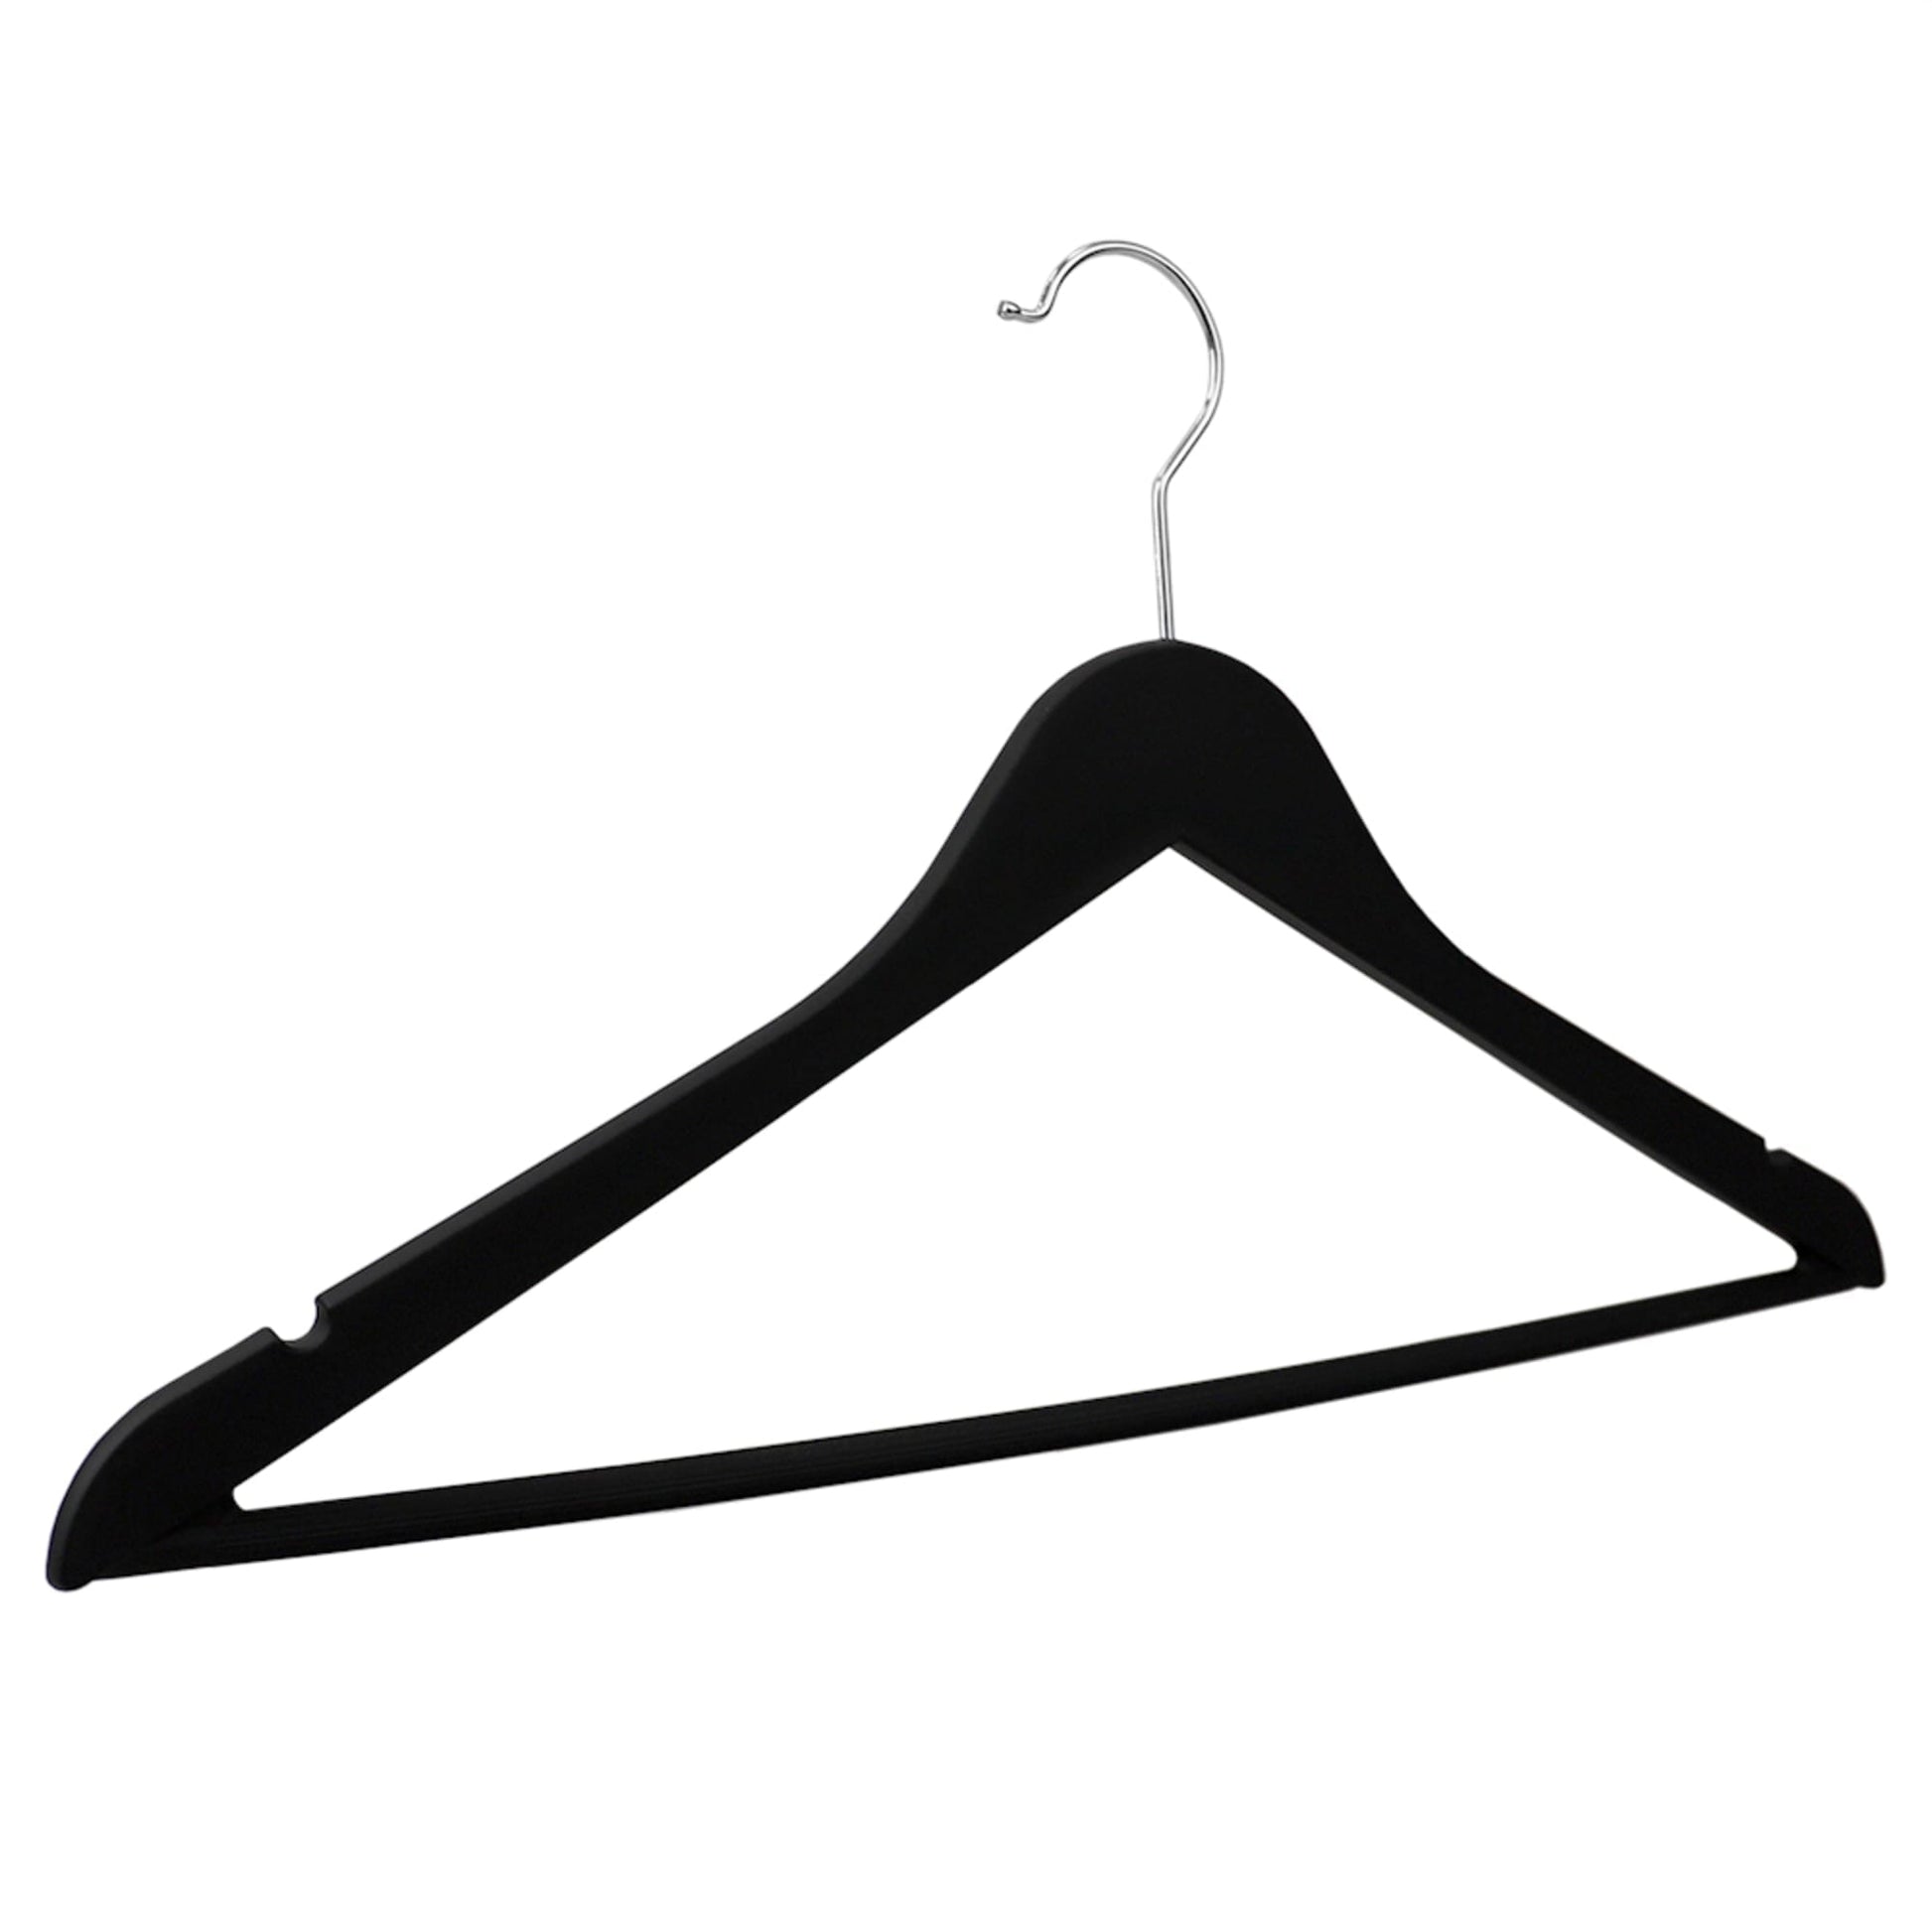  Clothes Hangers Plastic 20 Pack - Black Plastic Hangers - Makes  The Perfect Coat Hanger and General Space Saving Clothes Hangers for Closet  - Percheros Ganchos para Colgar Ropa Hangars : Home & Kitchen